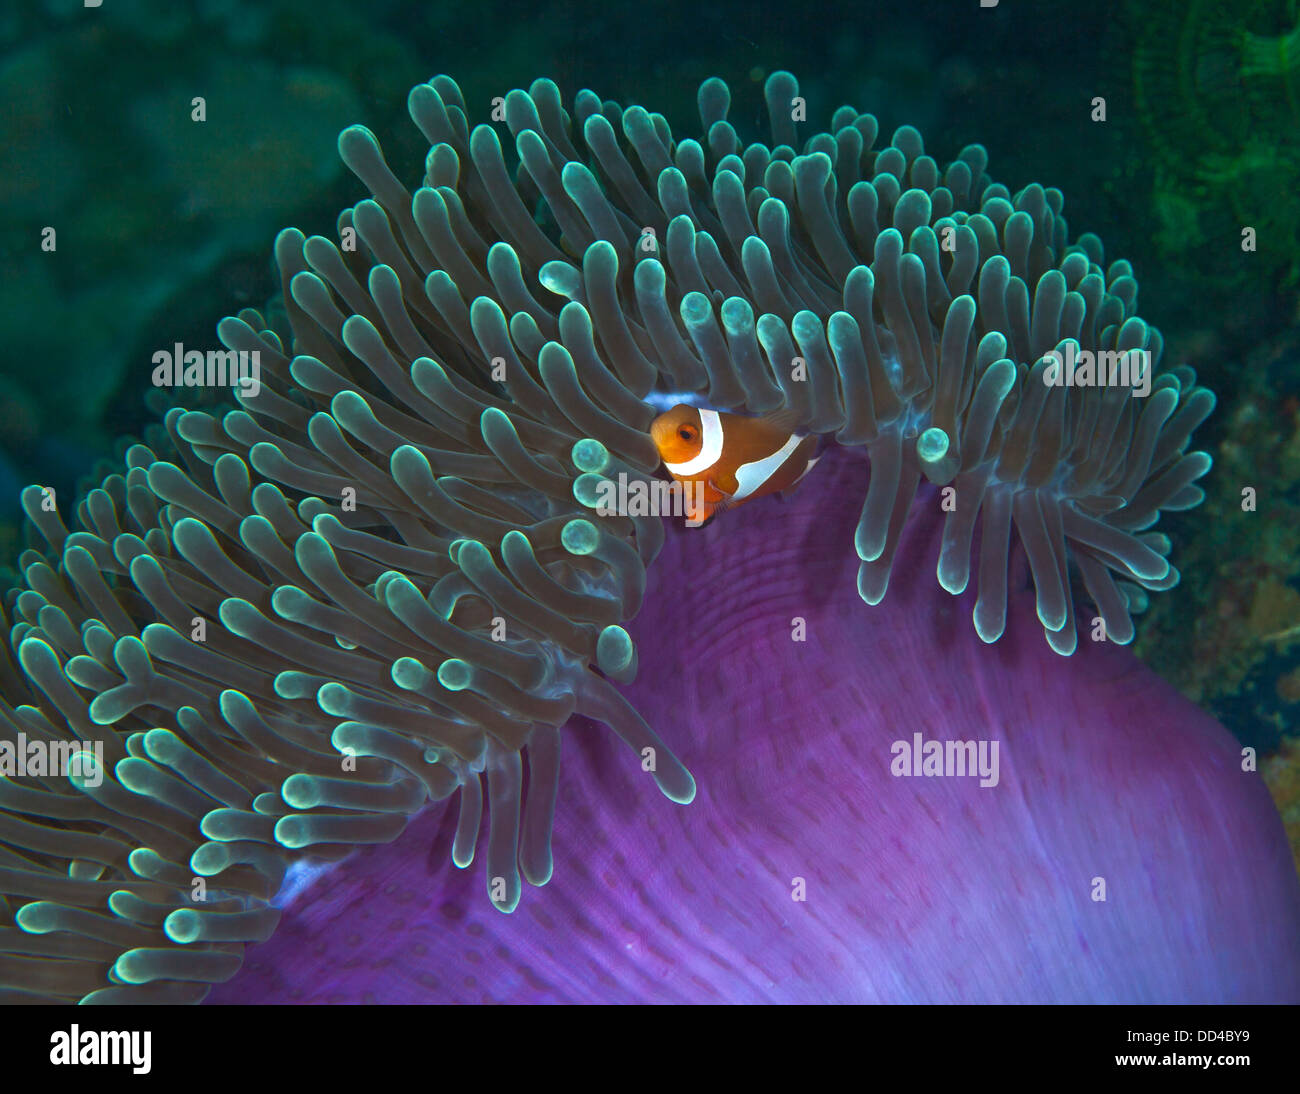 False Clownfish nestling in purple green anemone Stock Photo